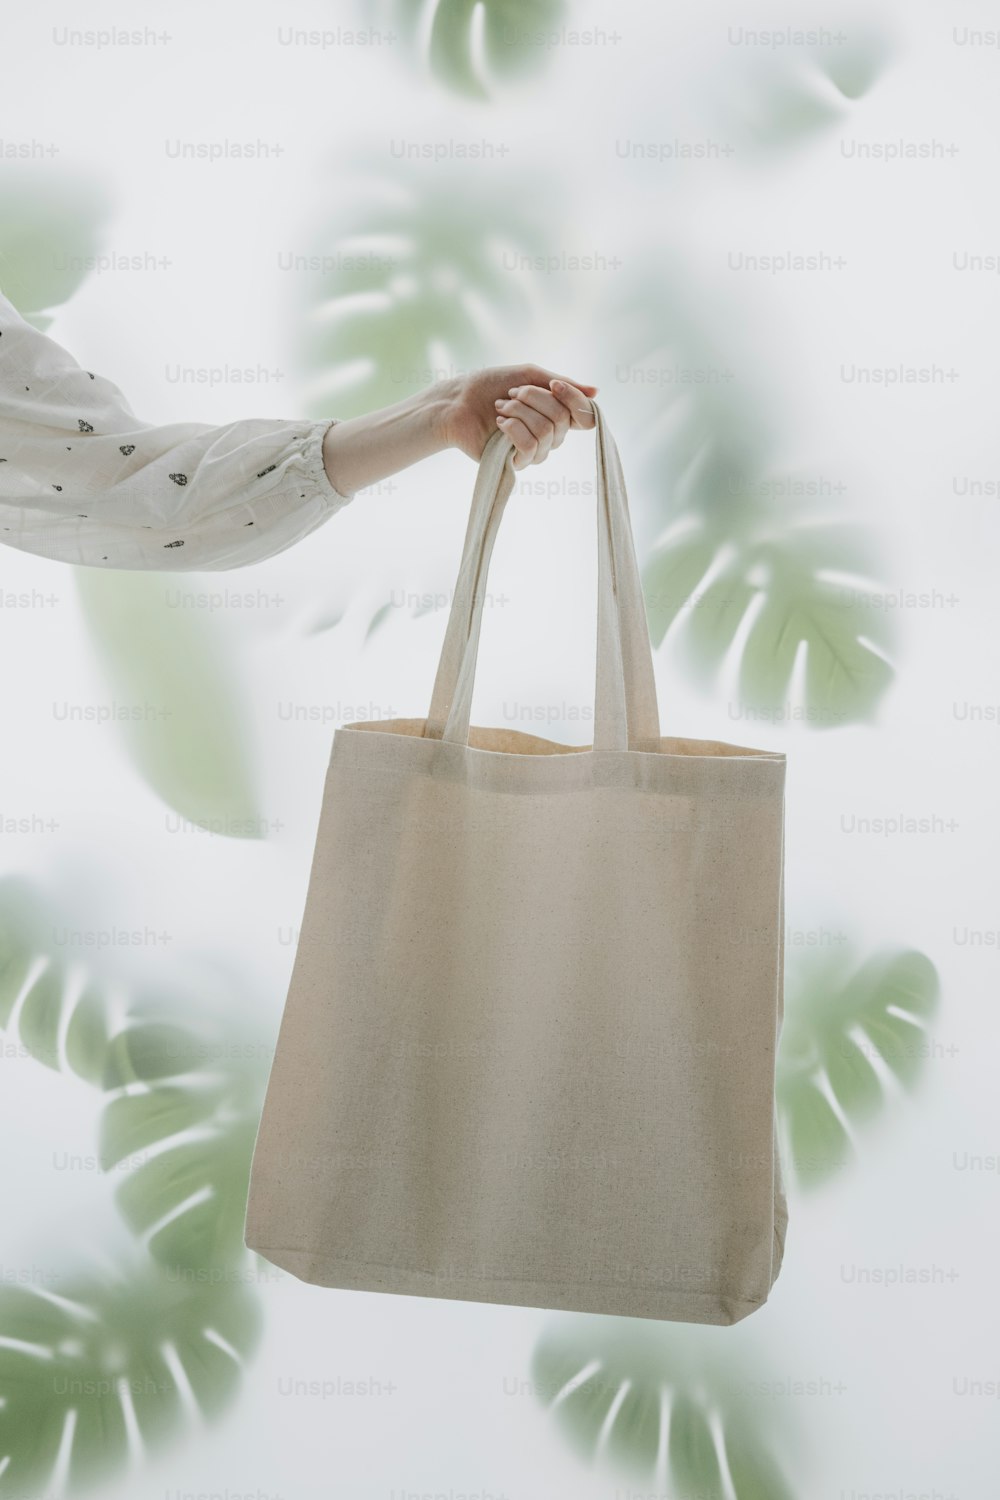 Una persona sosteniendo una bolsa frente a una planta